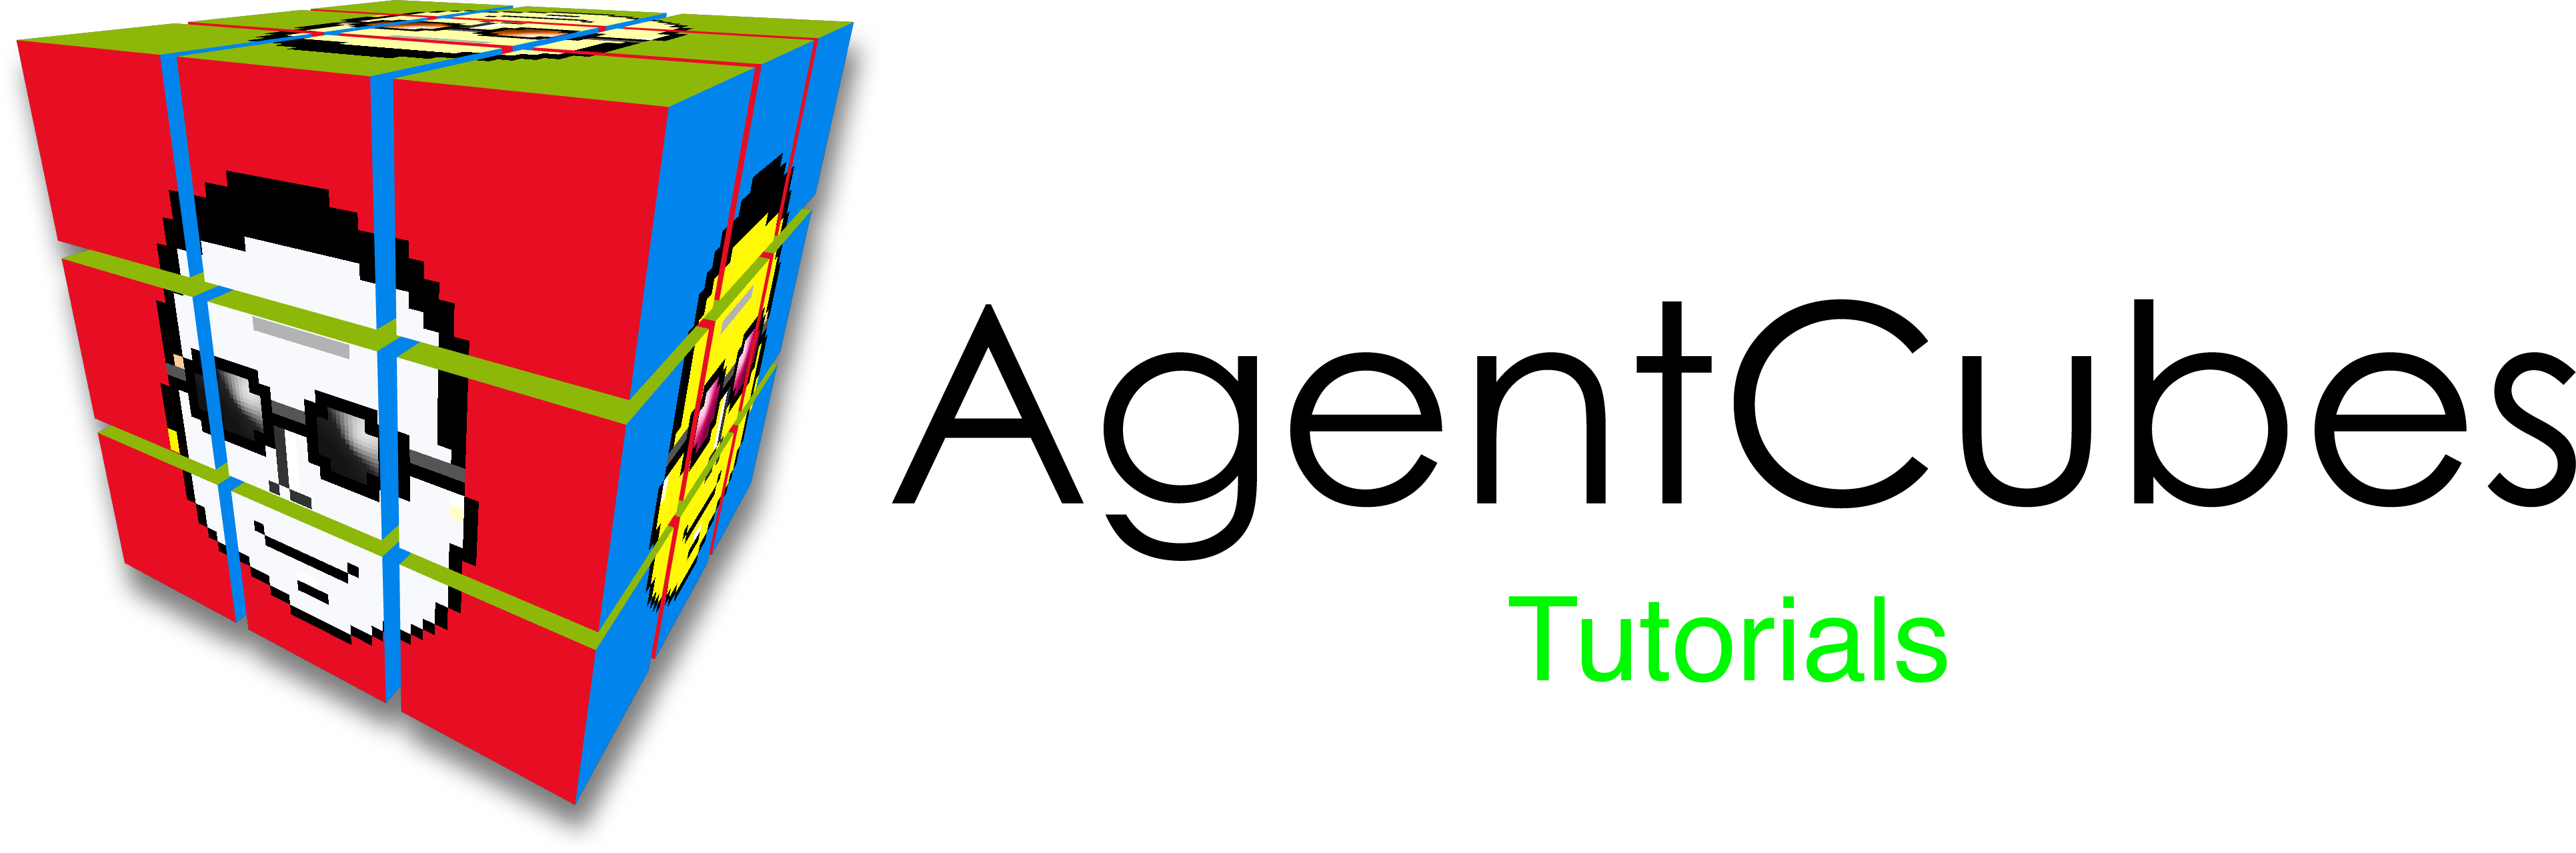 AgentCubes' tutorial page logo